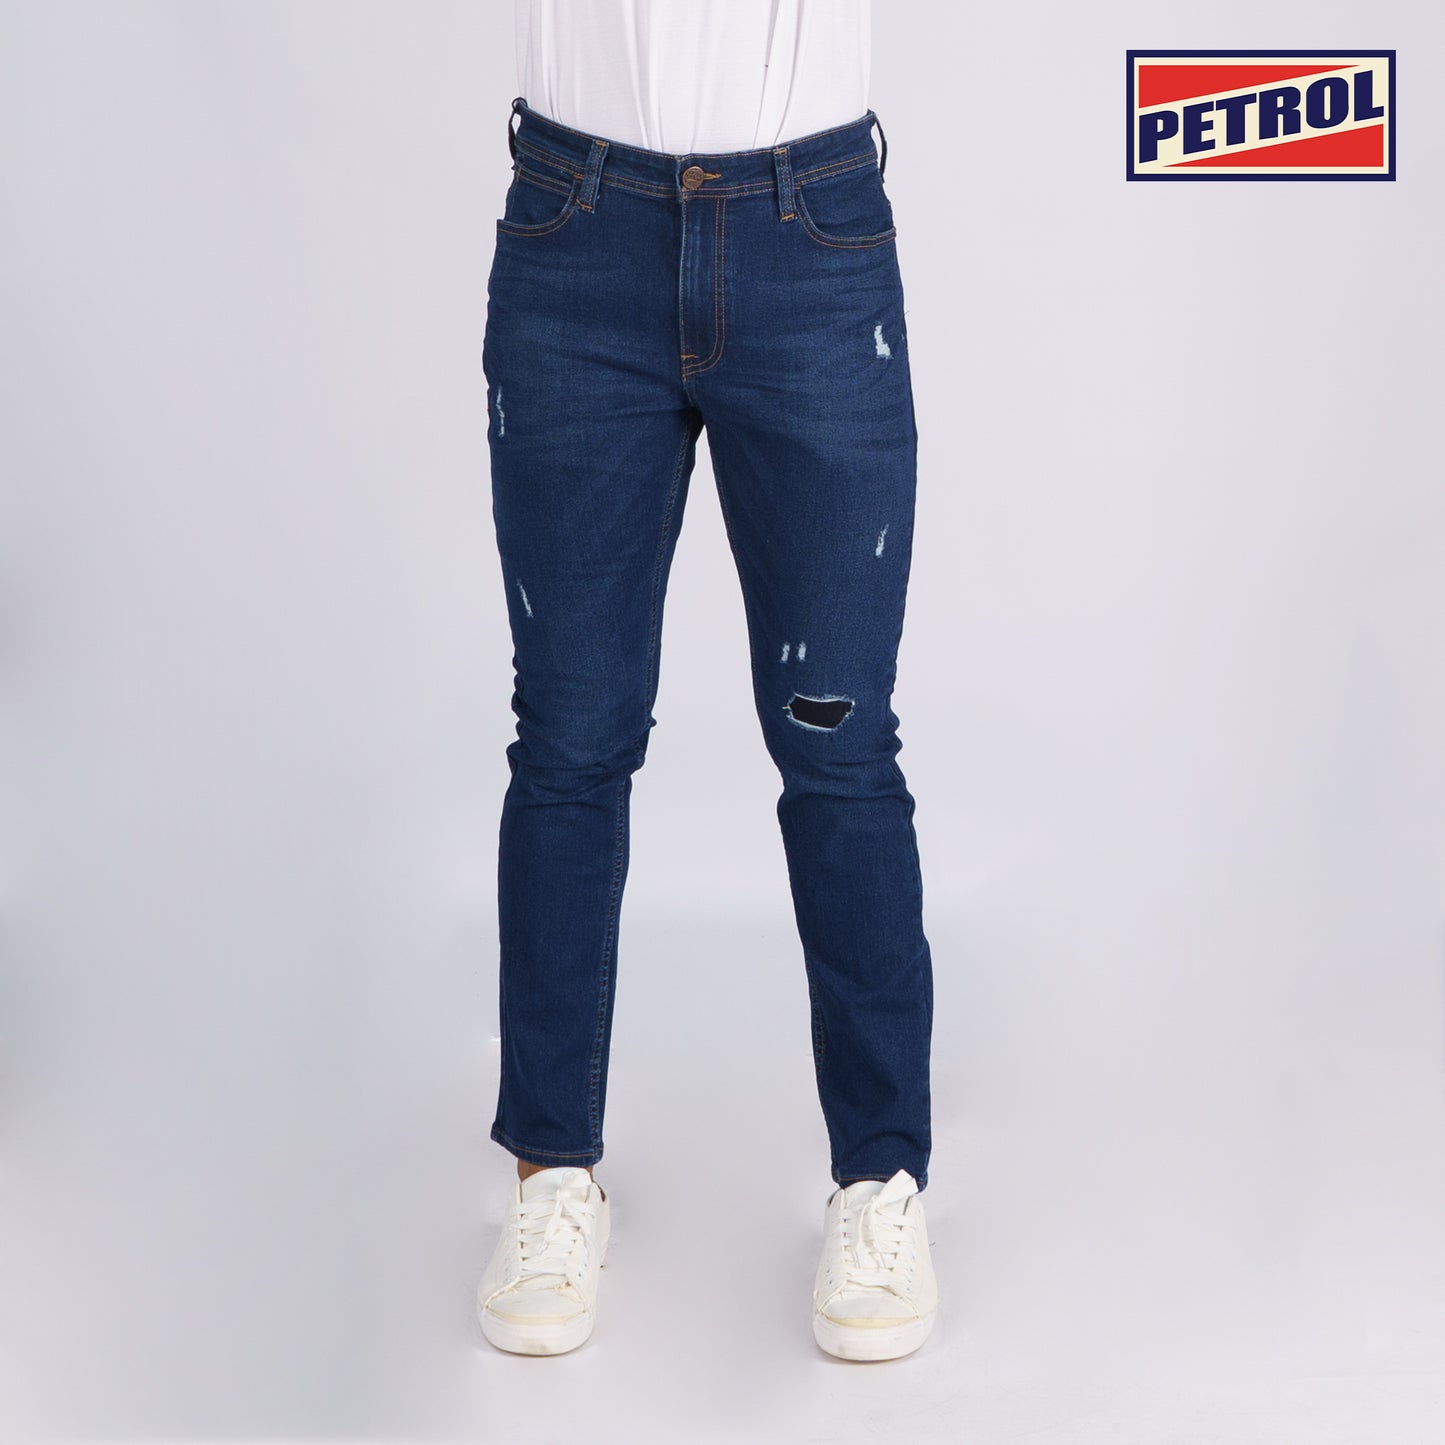 Petrol Basic Denim Pants for Men Skin Tight Fitting Mid Rise Trendy fashion Casual Bottoms Medium Shade Jeans for Men 149426 (Medium Shade)